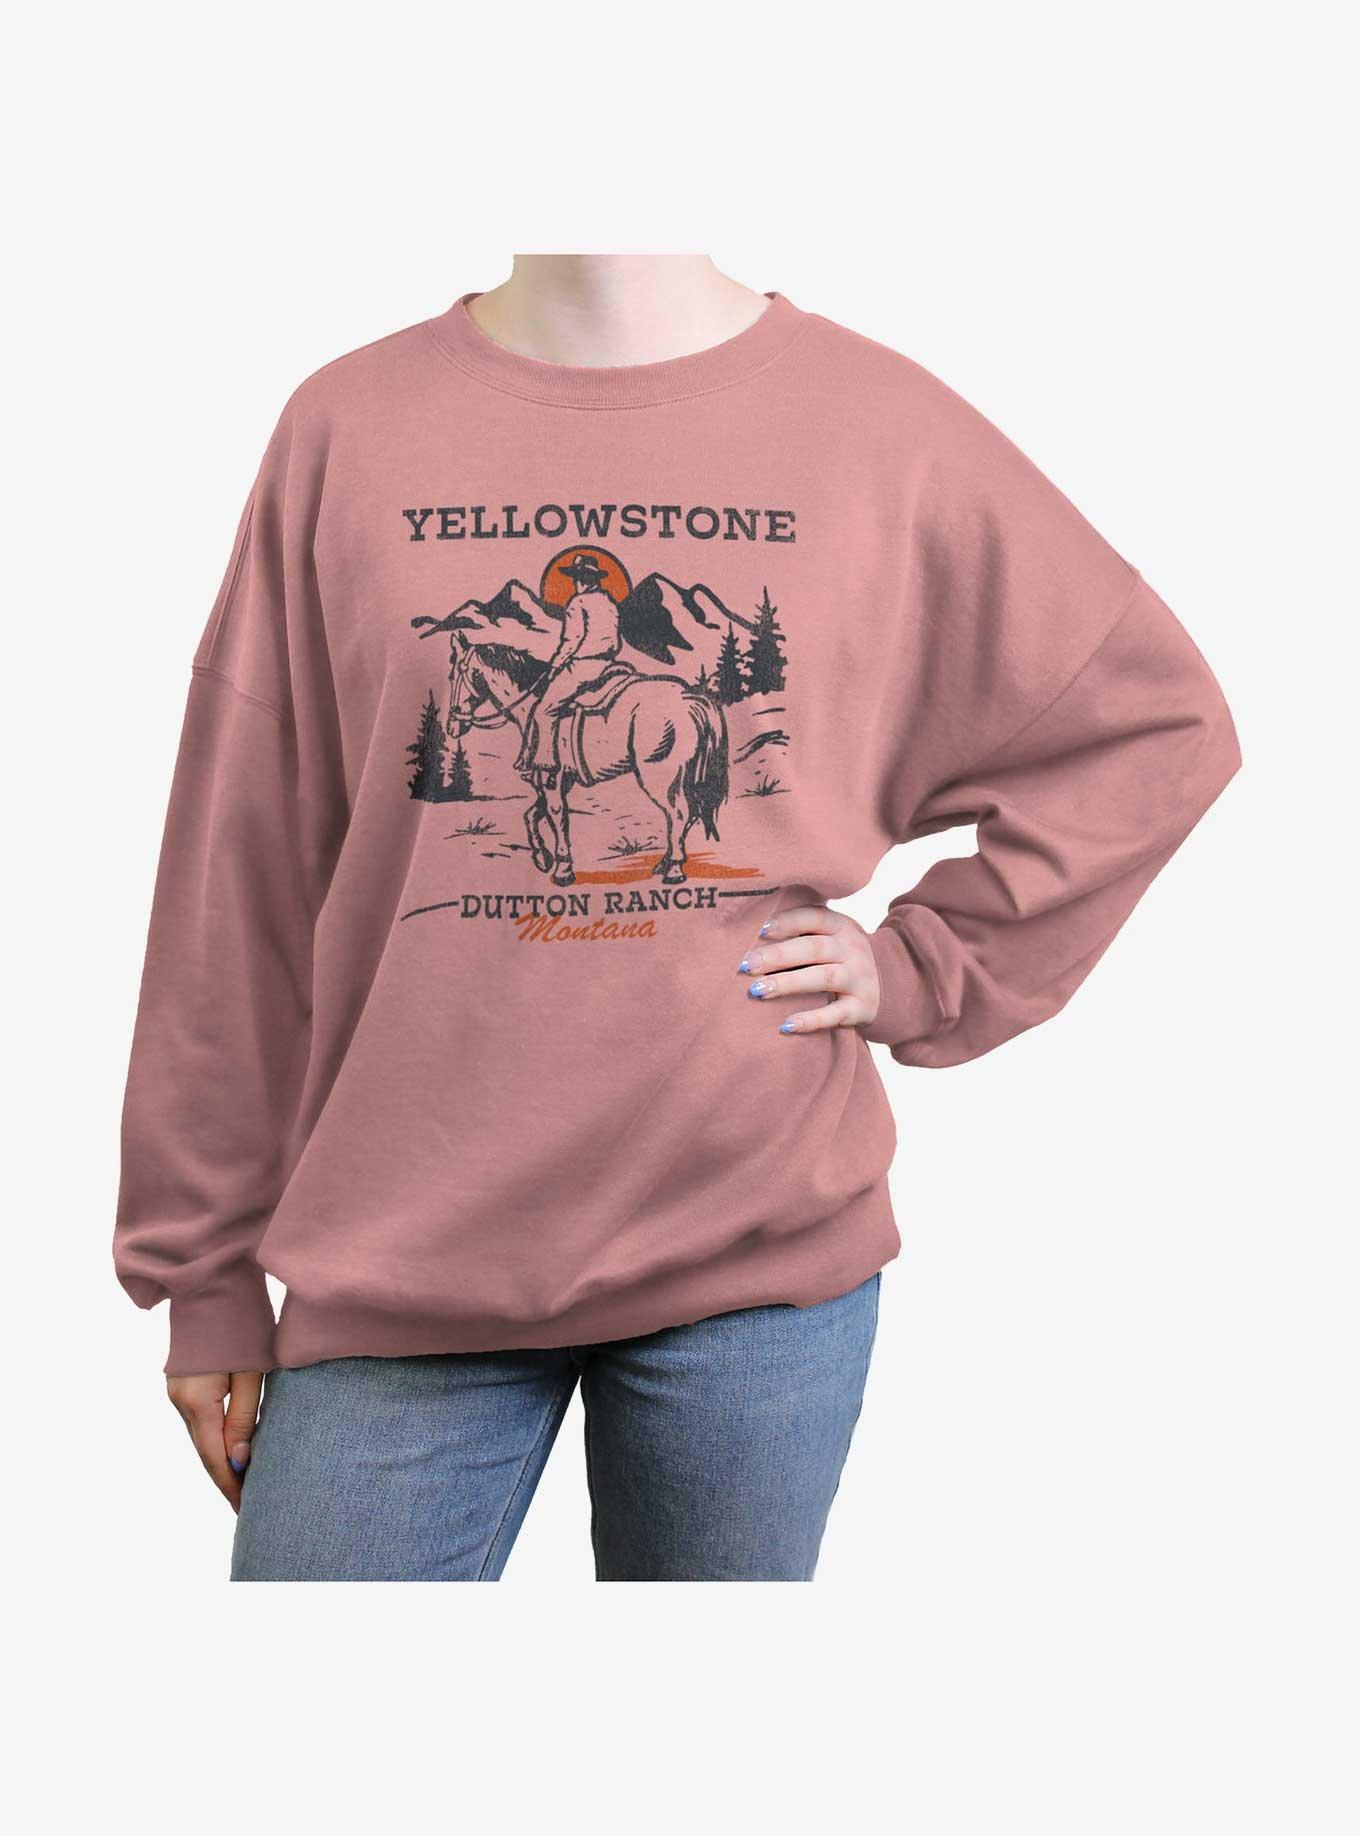 Yellowstone Dutton Ranch Mountains Girls Oversized Sweatshirt, DESERTPNK, hi-res